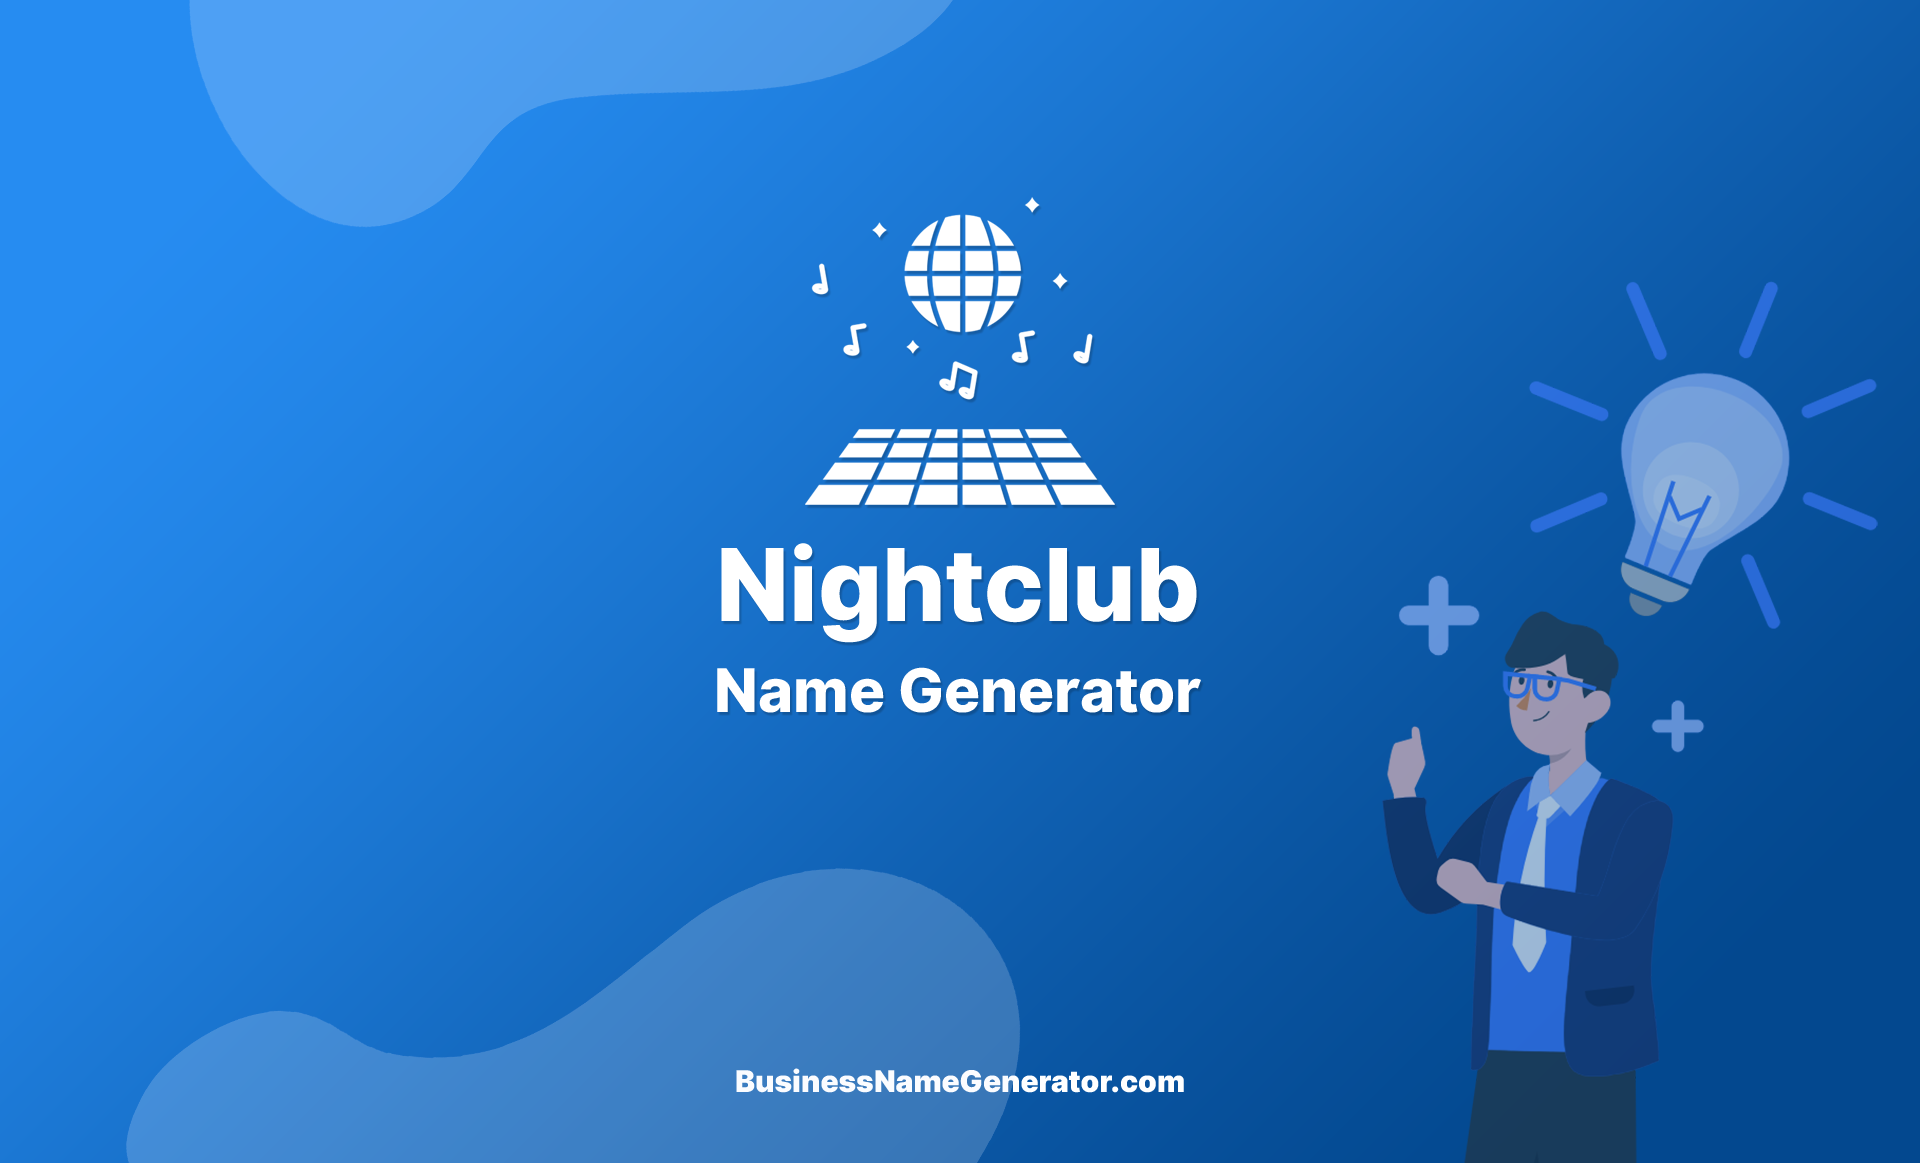 Nightclub Name Generator